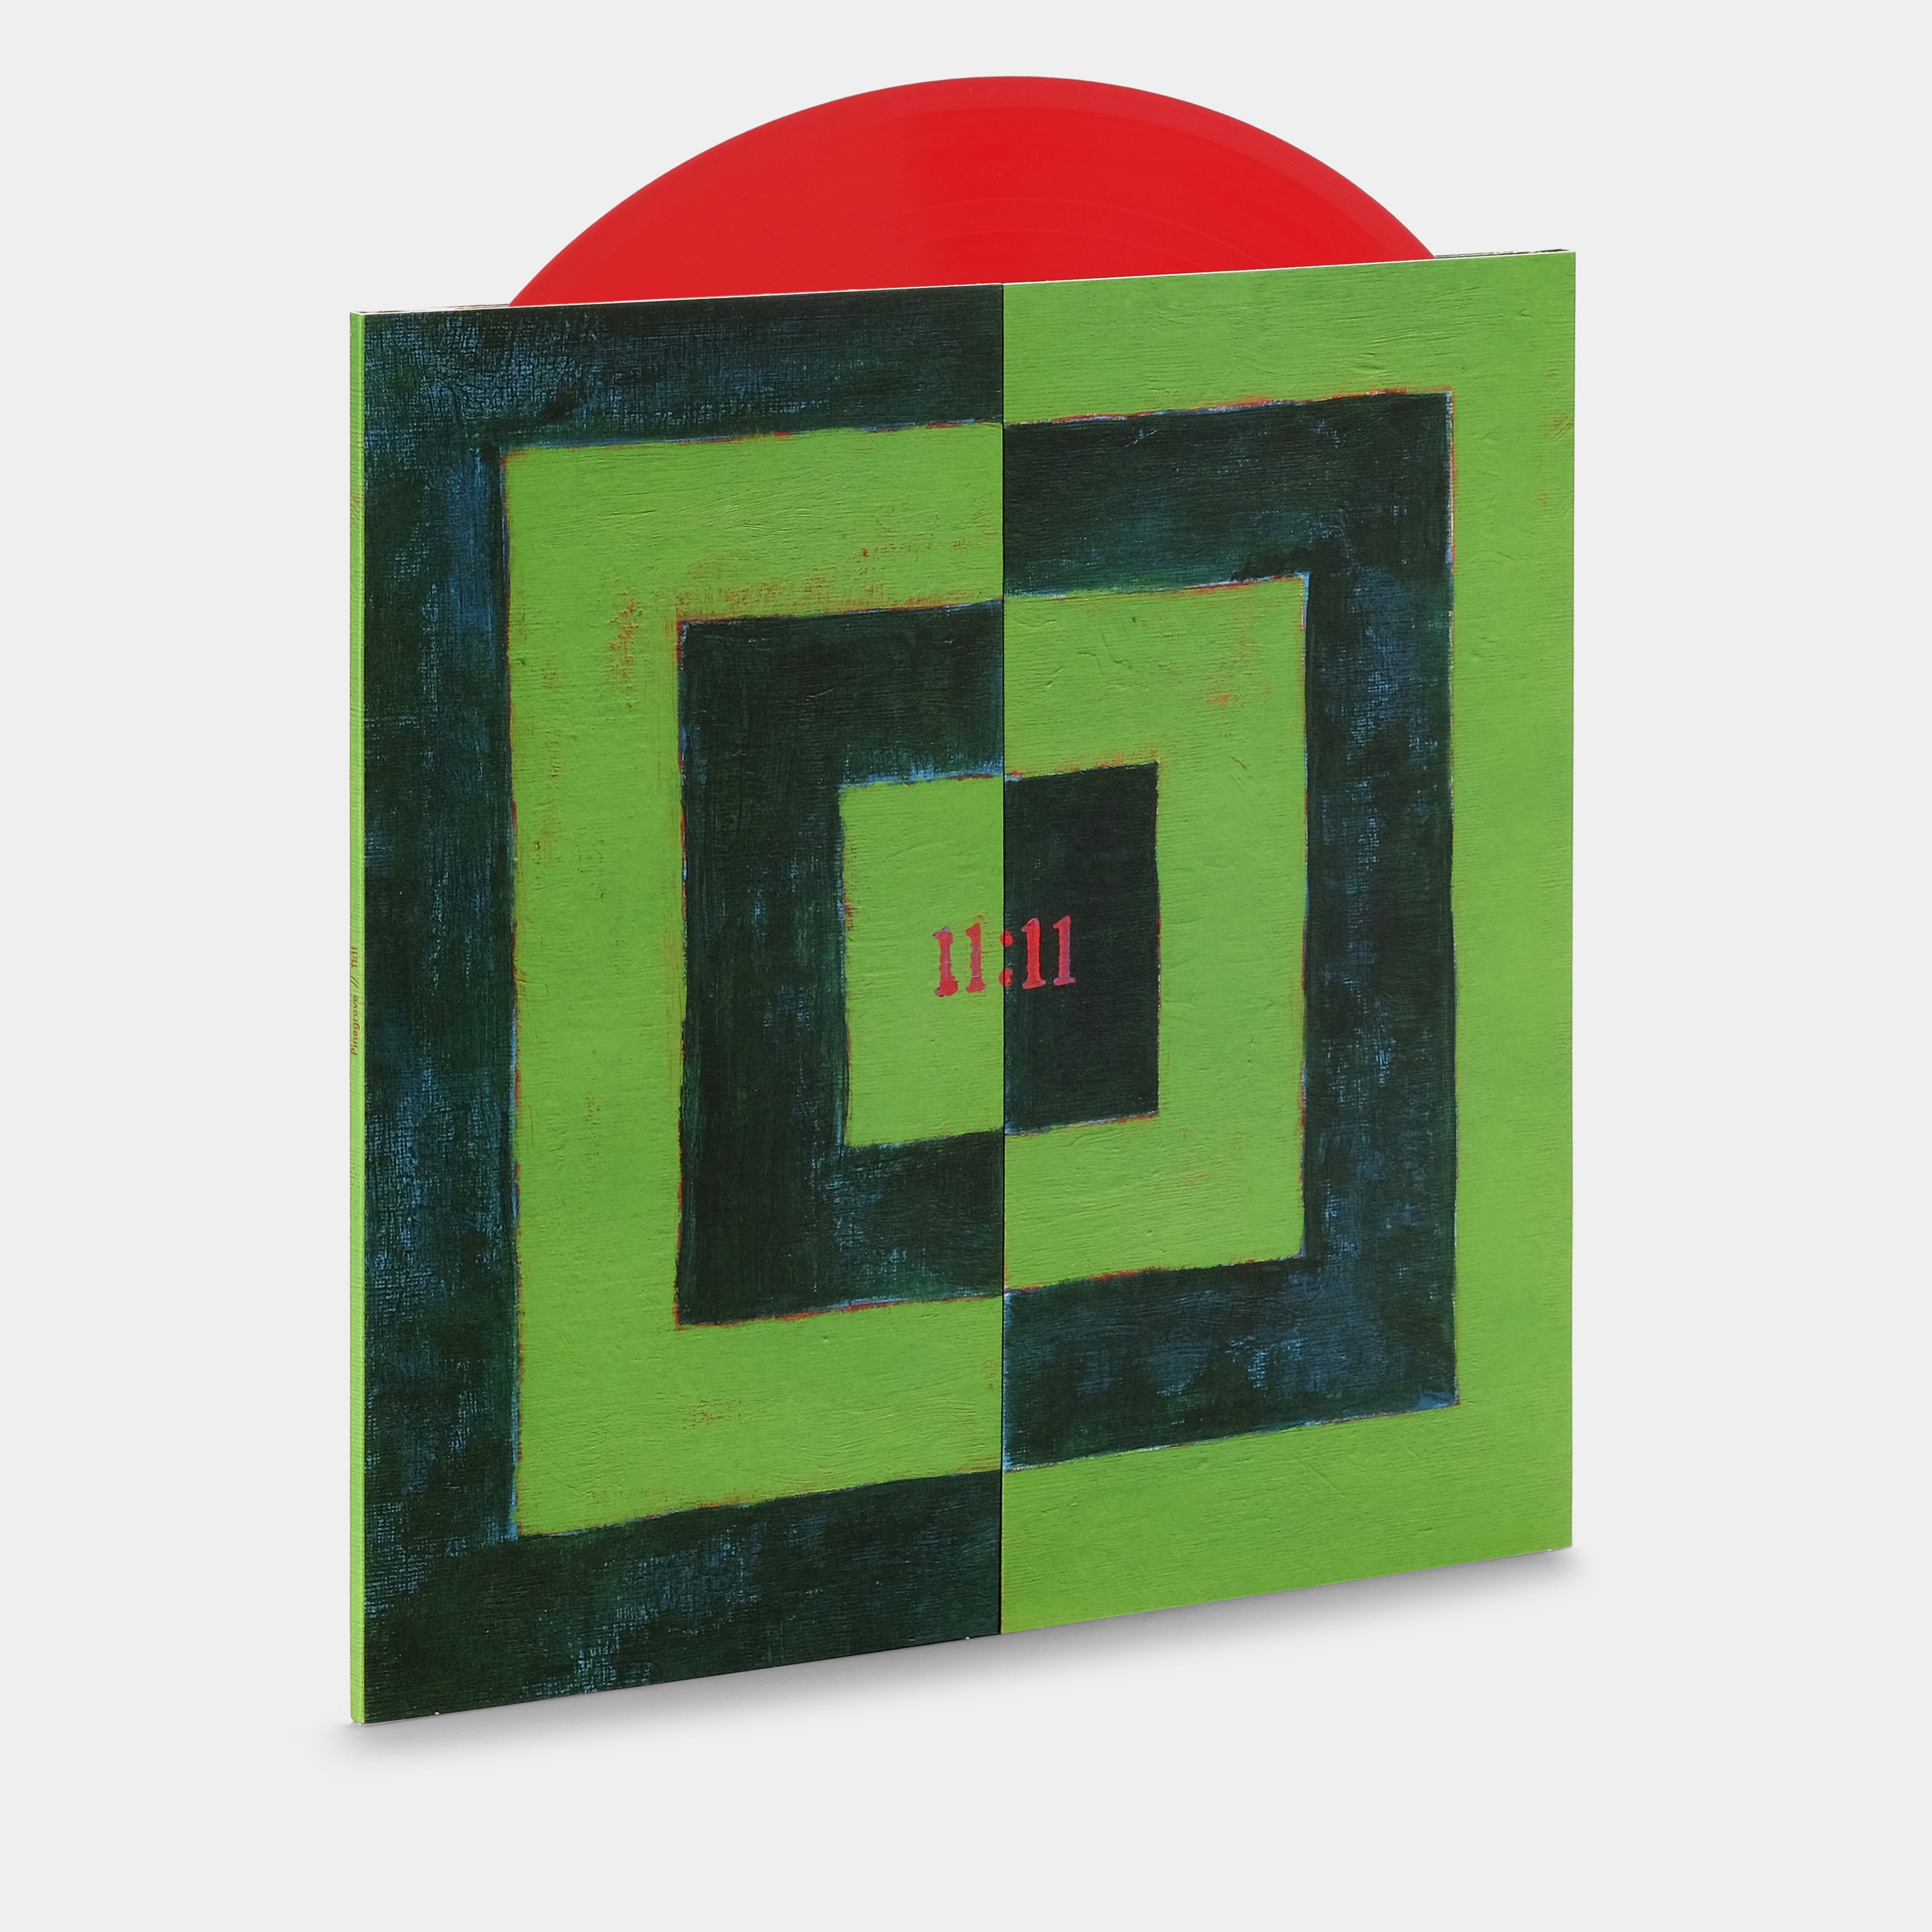 Pinegrove - 11:11 LP Red Vinyl Record